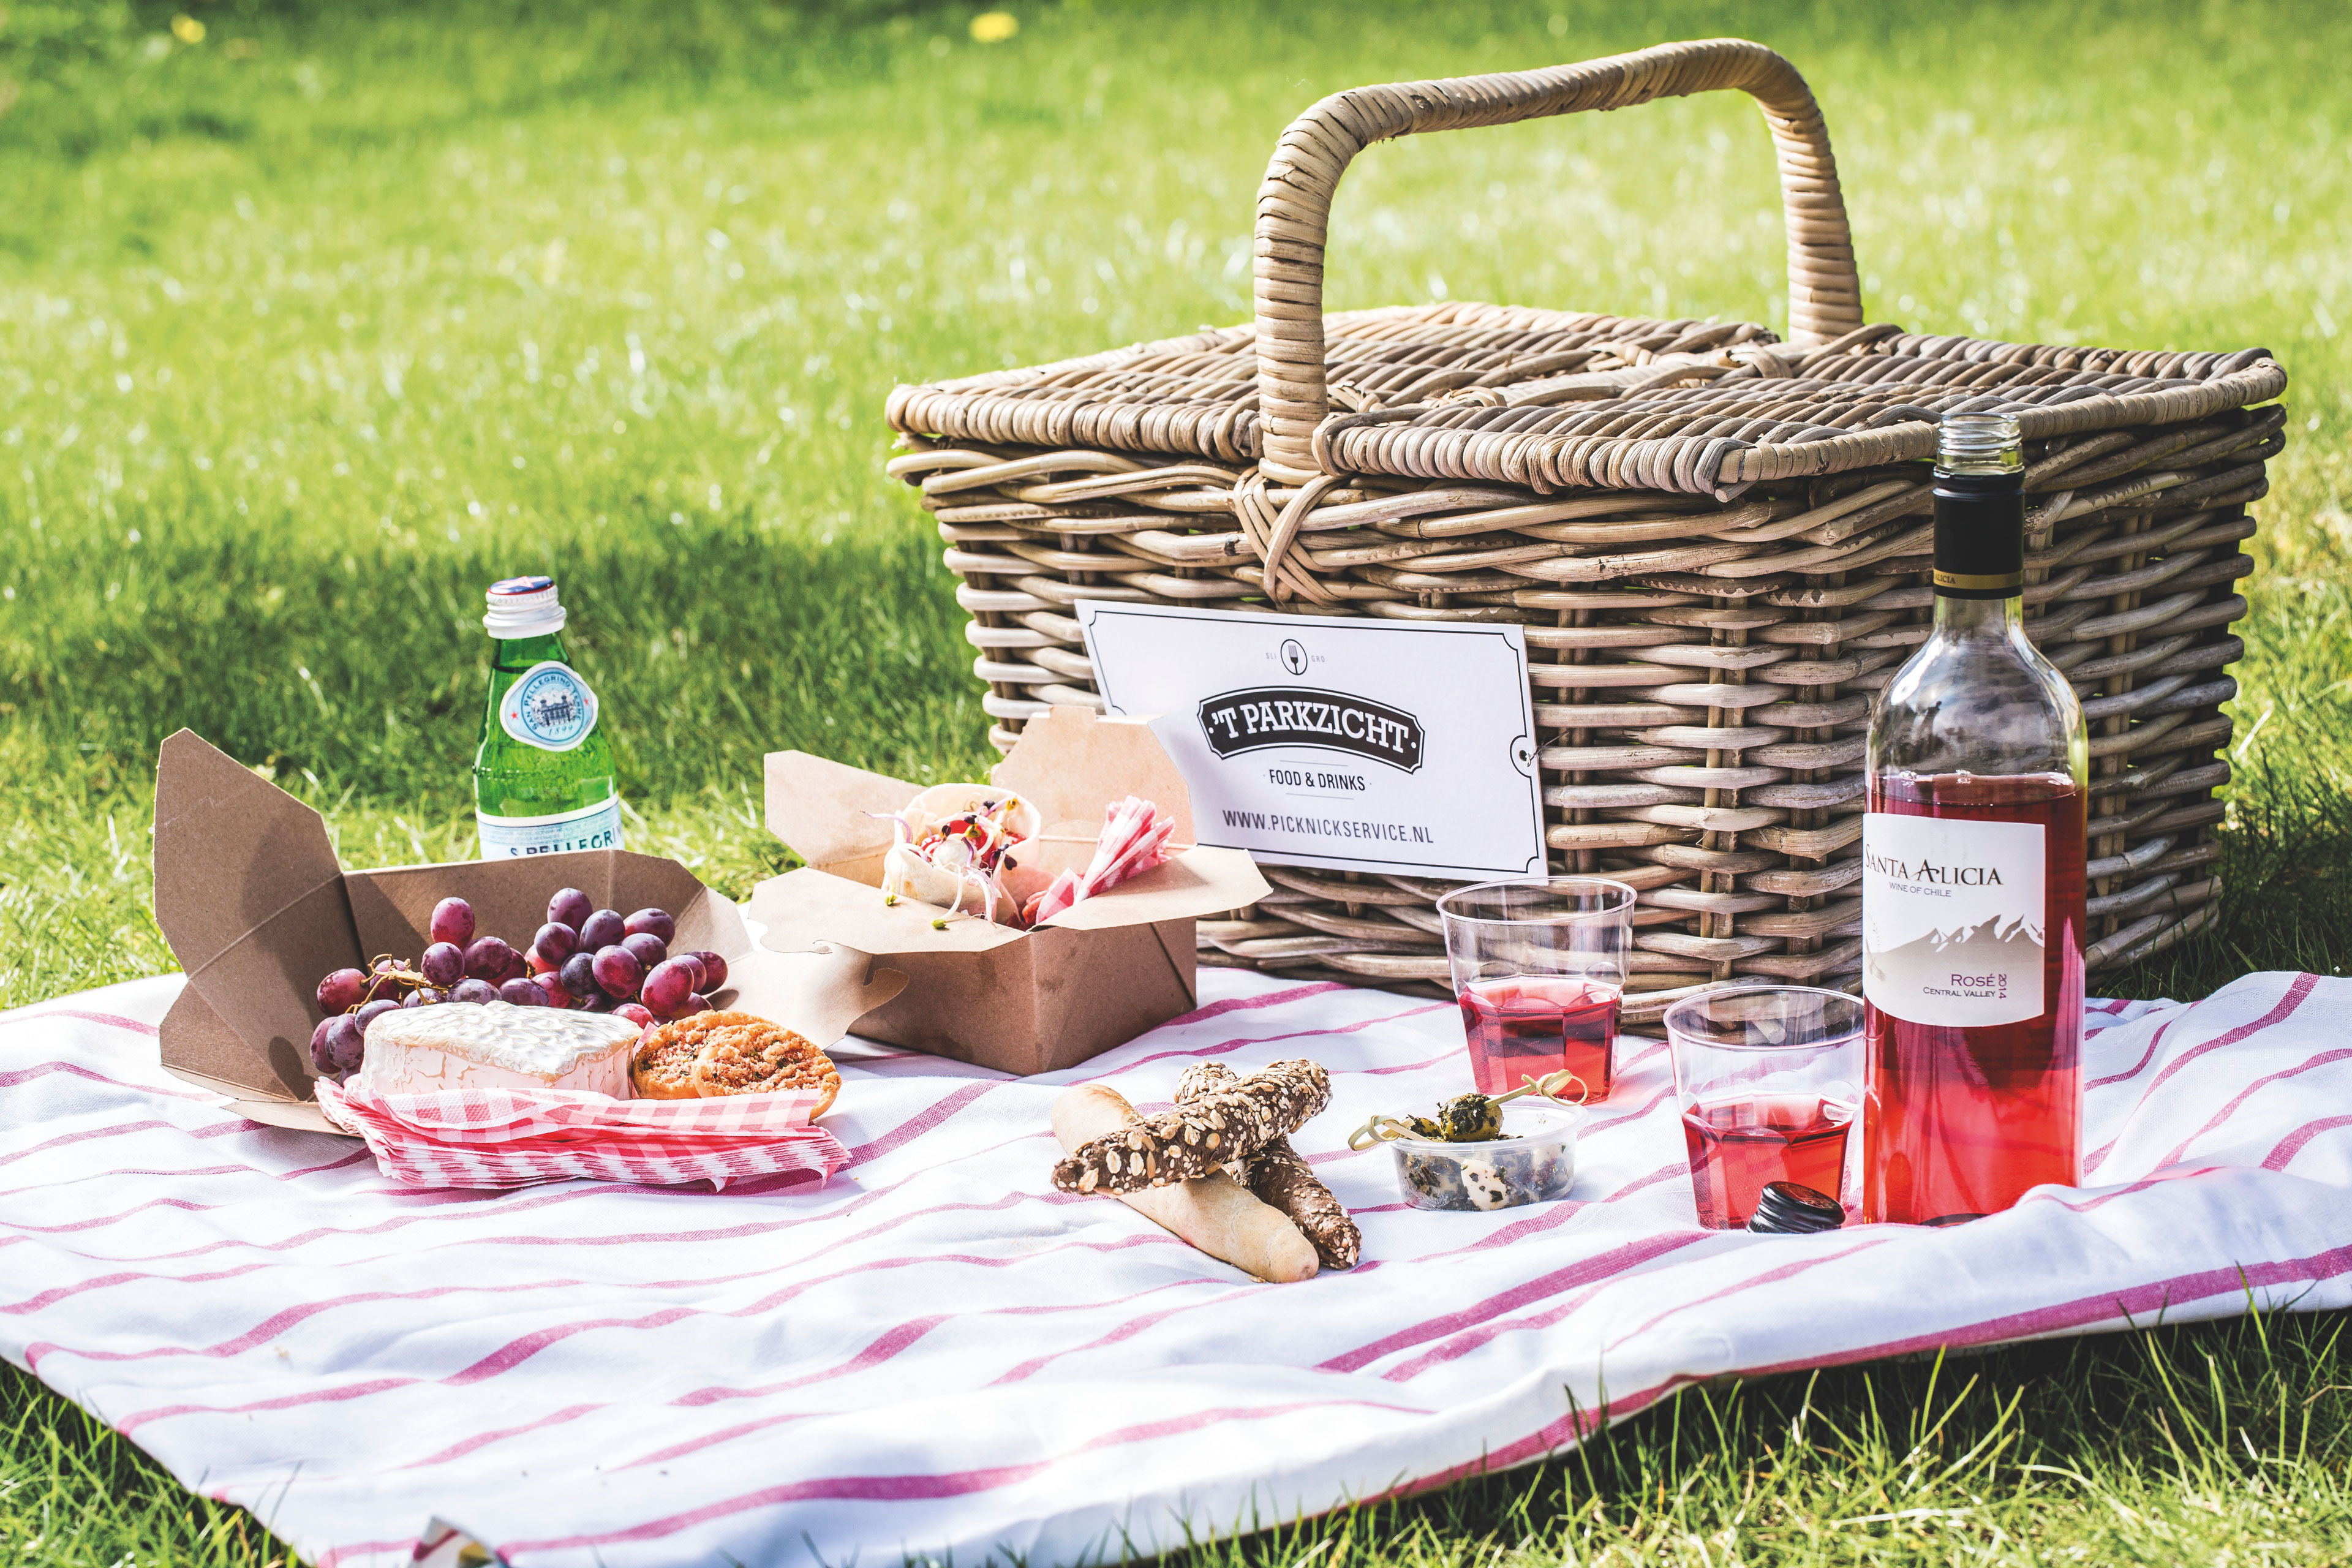 Picknick to | Sligro.nl